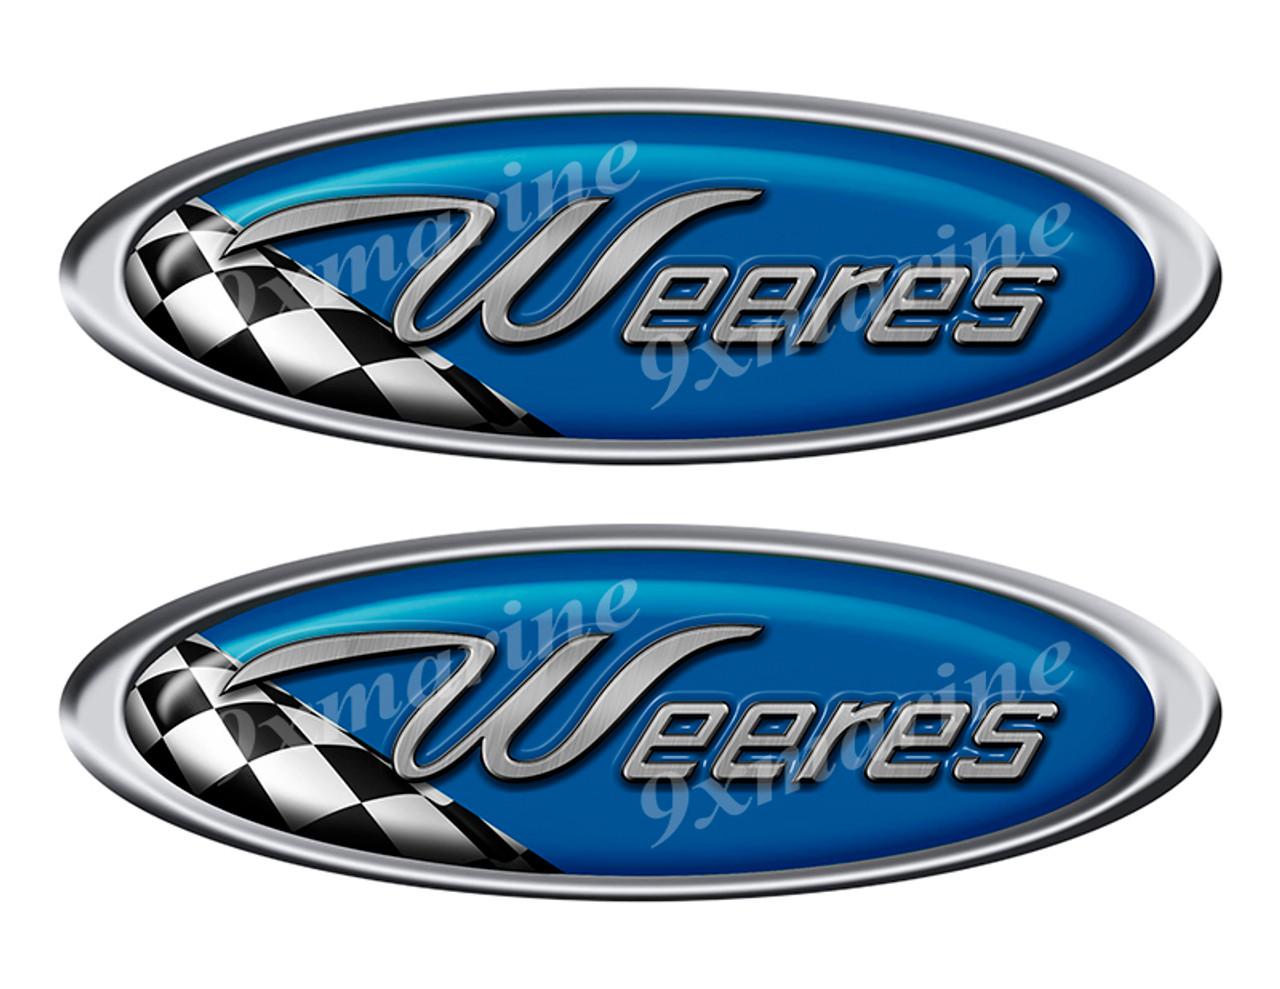 Two Weeres Vinyl Racing Oval Stickers - 10" long each